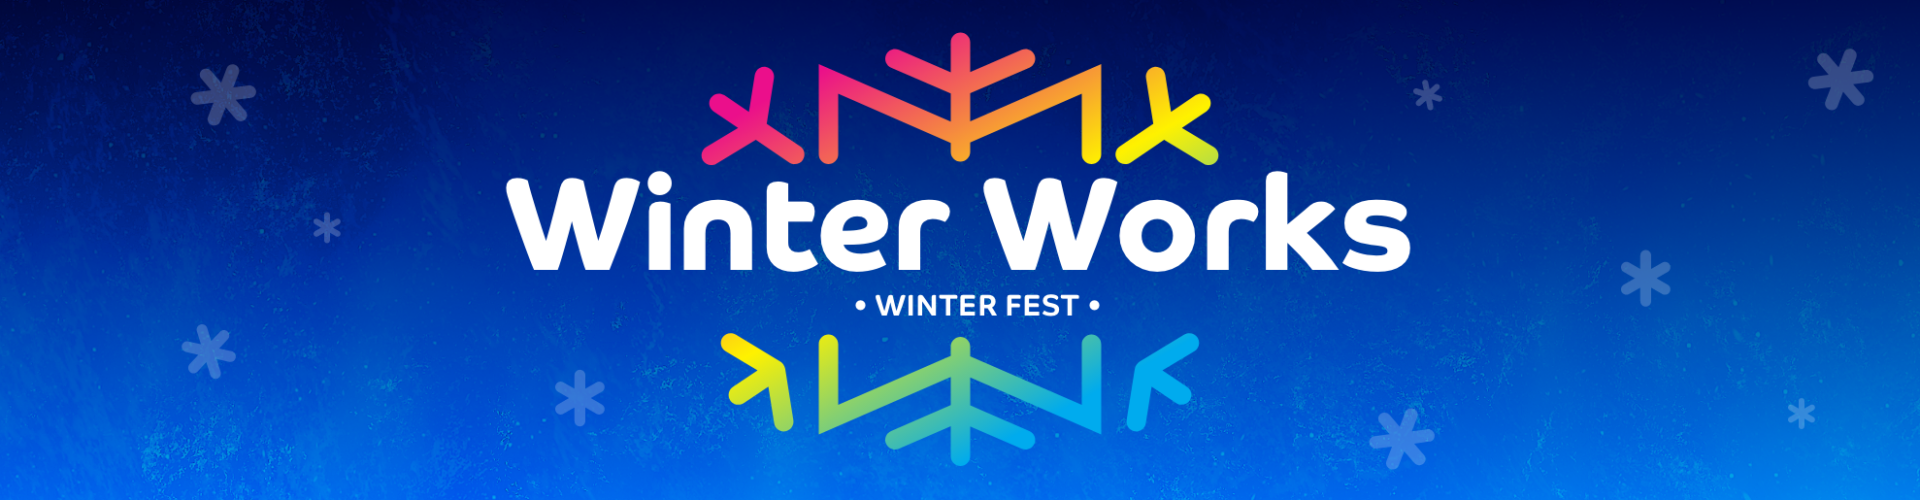 Winter Works, a Downtown Windsor Winter Fest Initiative